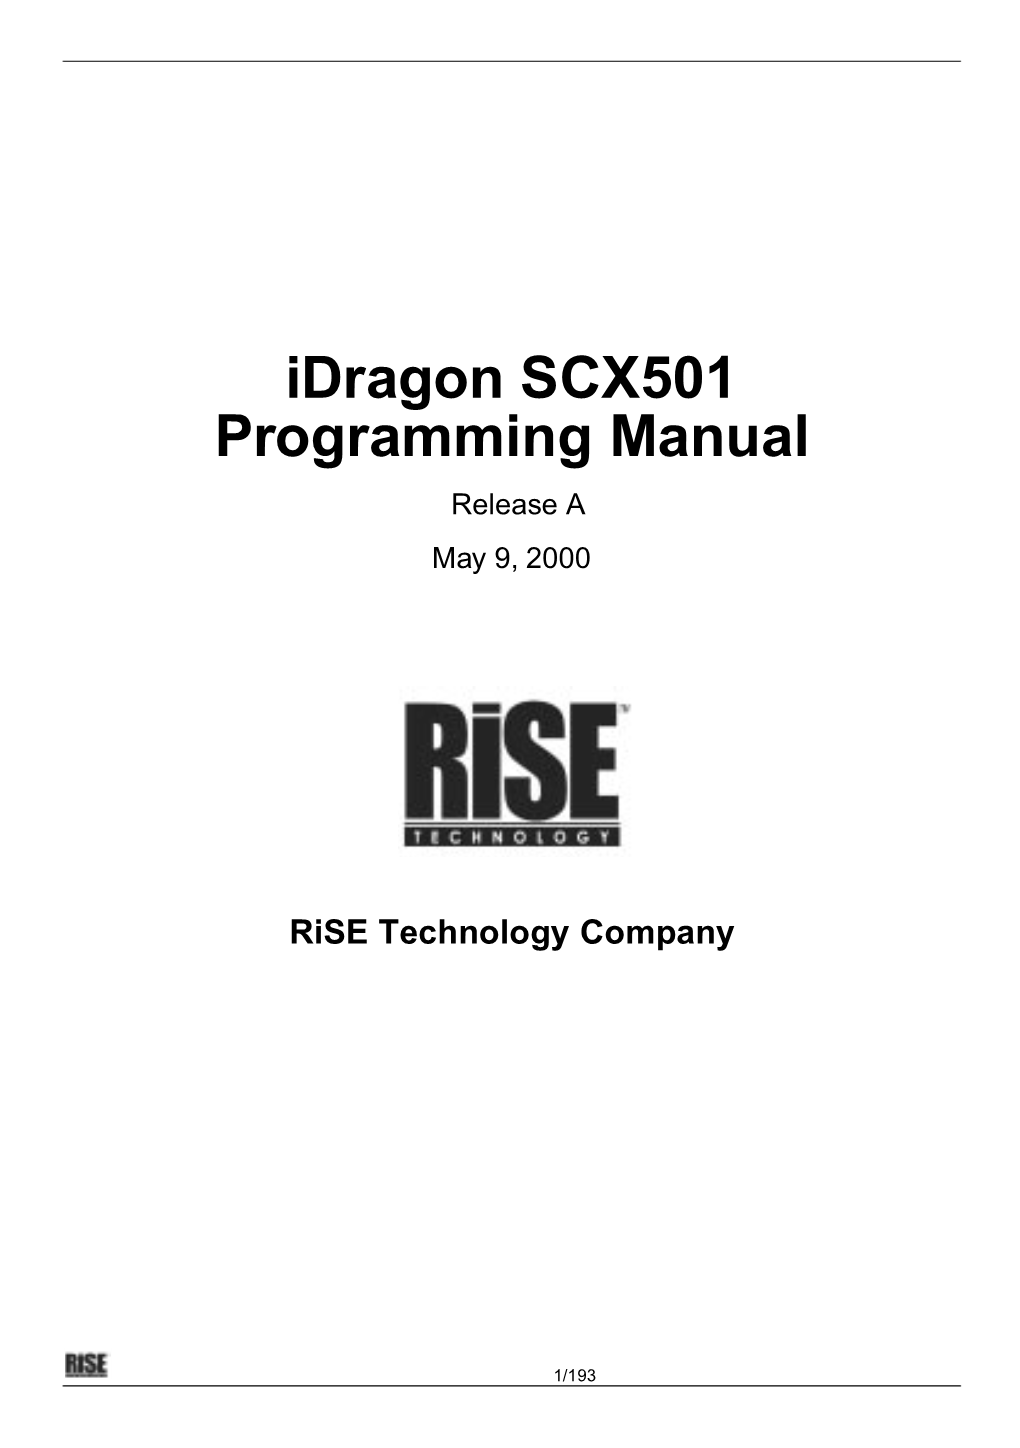 Idragon SCX501 Programming Manual Release a May 9, 2000